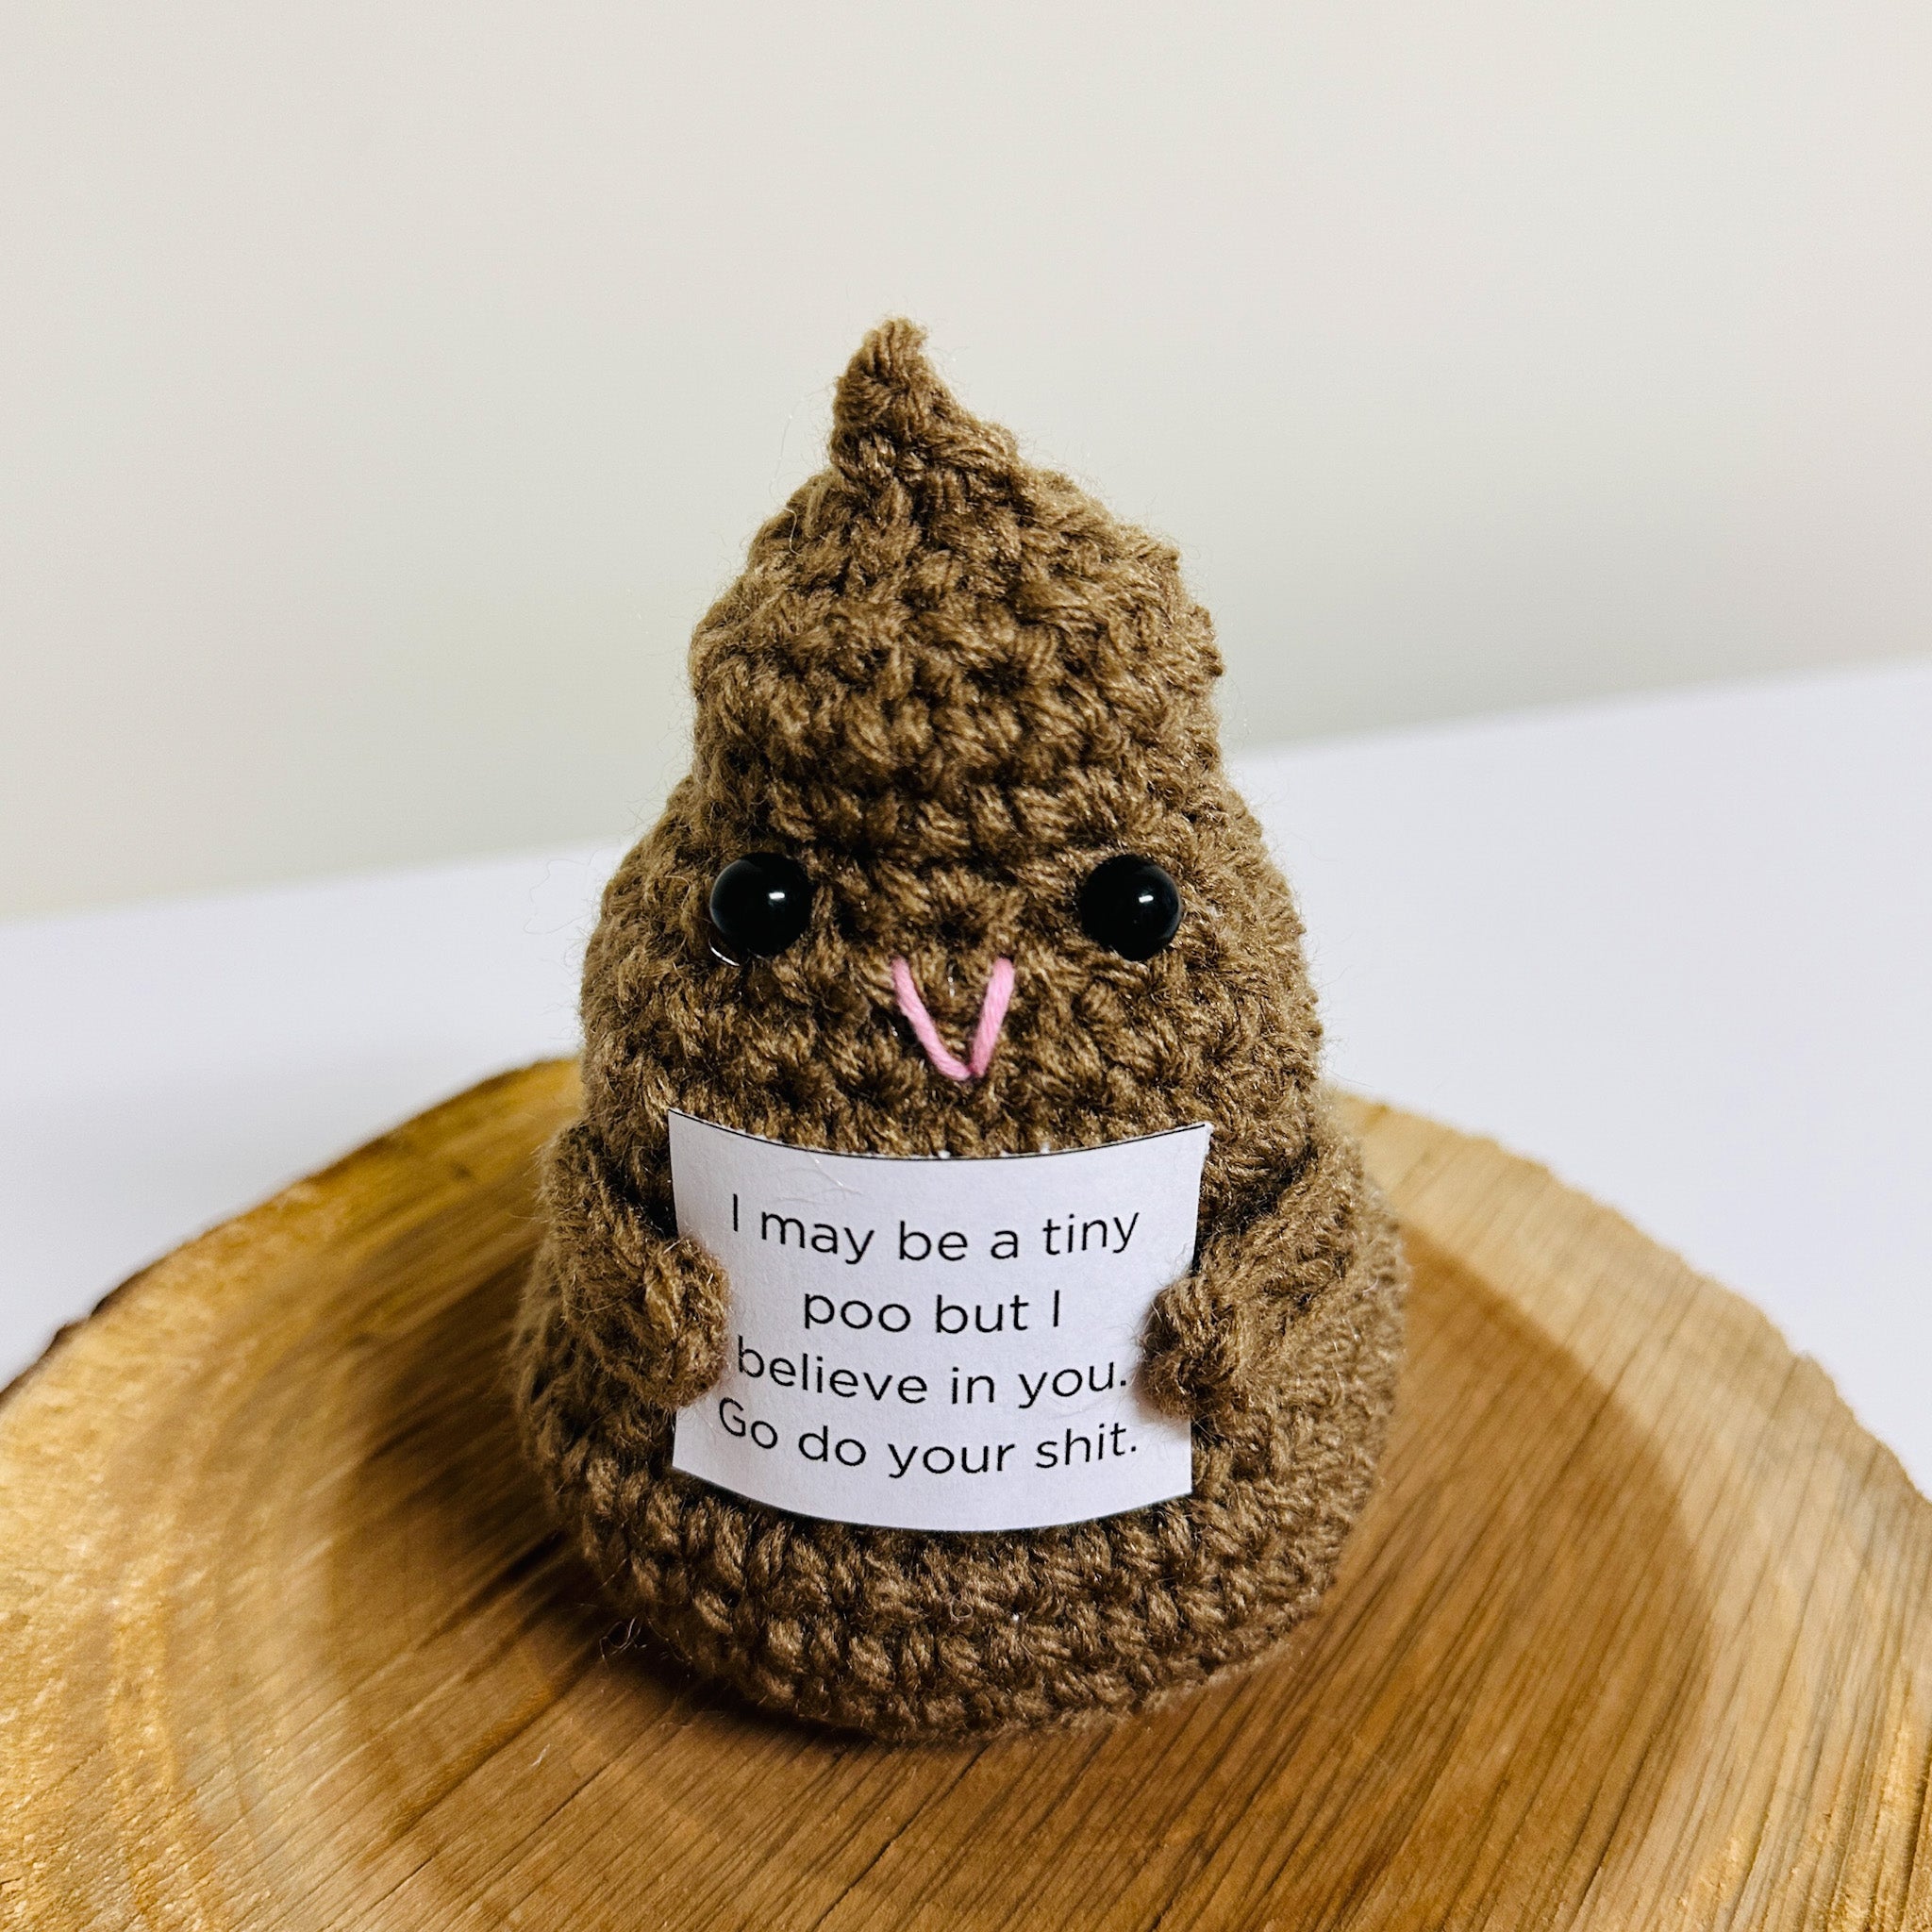 Positive Poop – La Petite Crocheterie